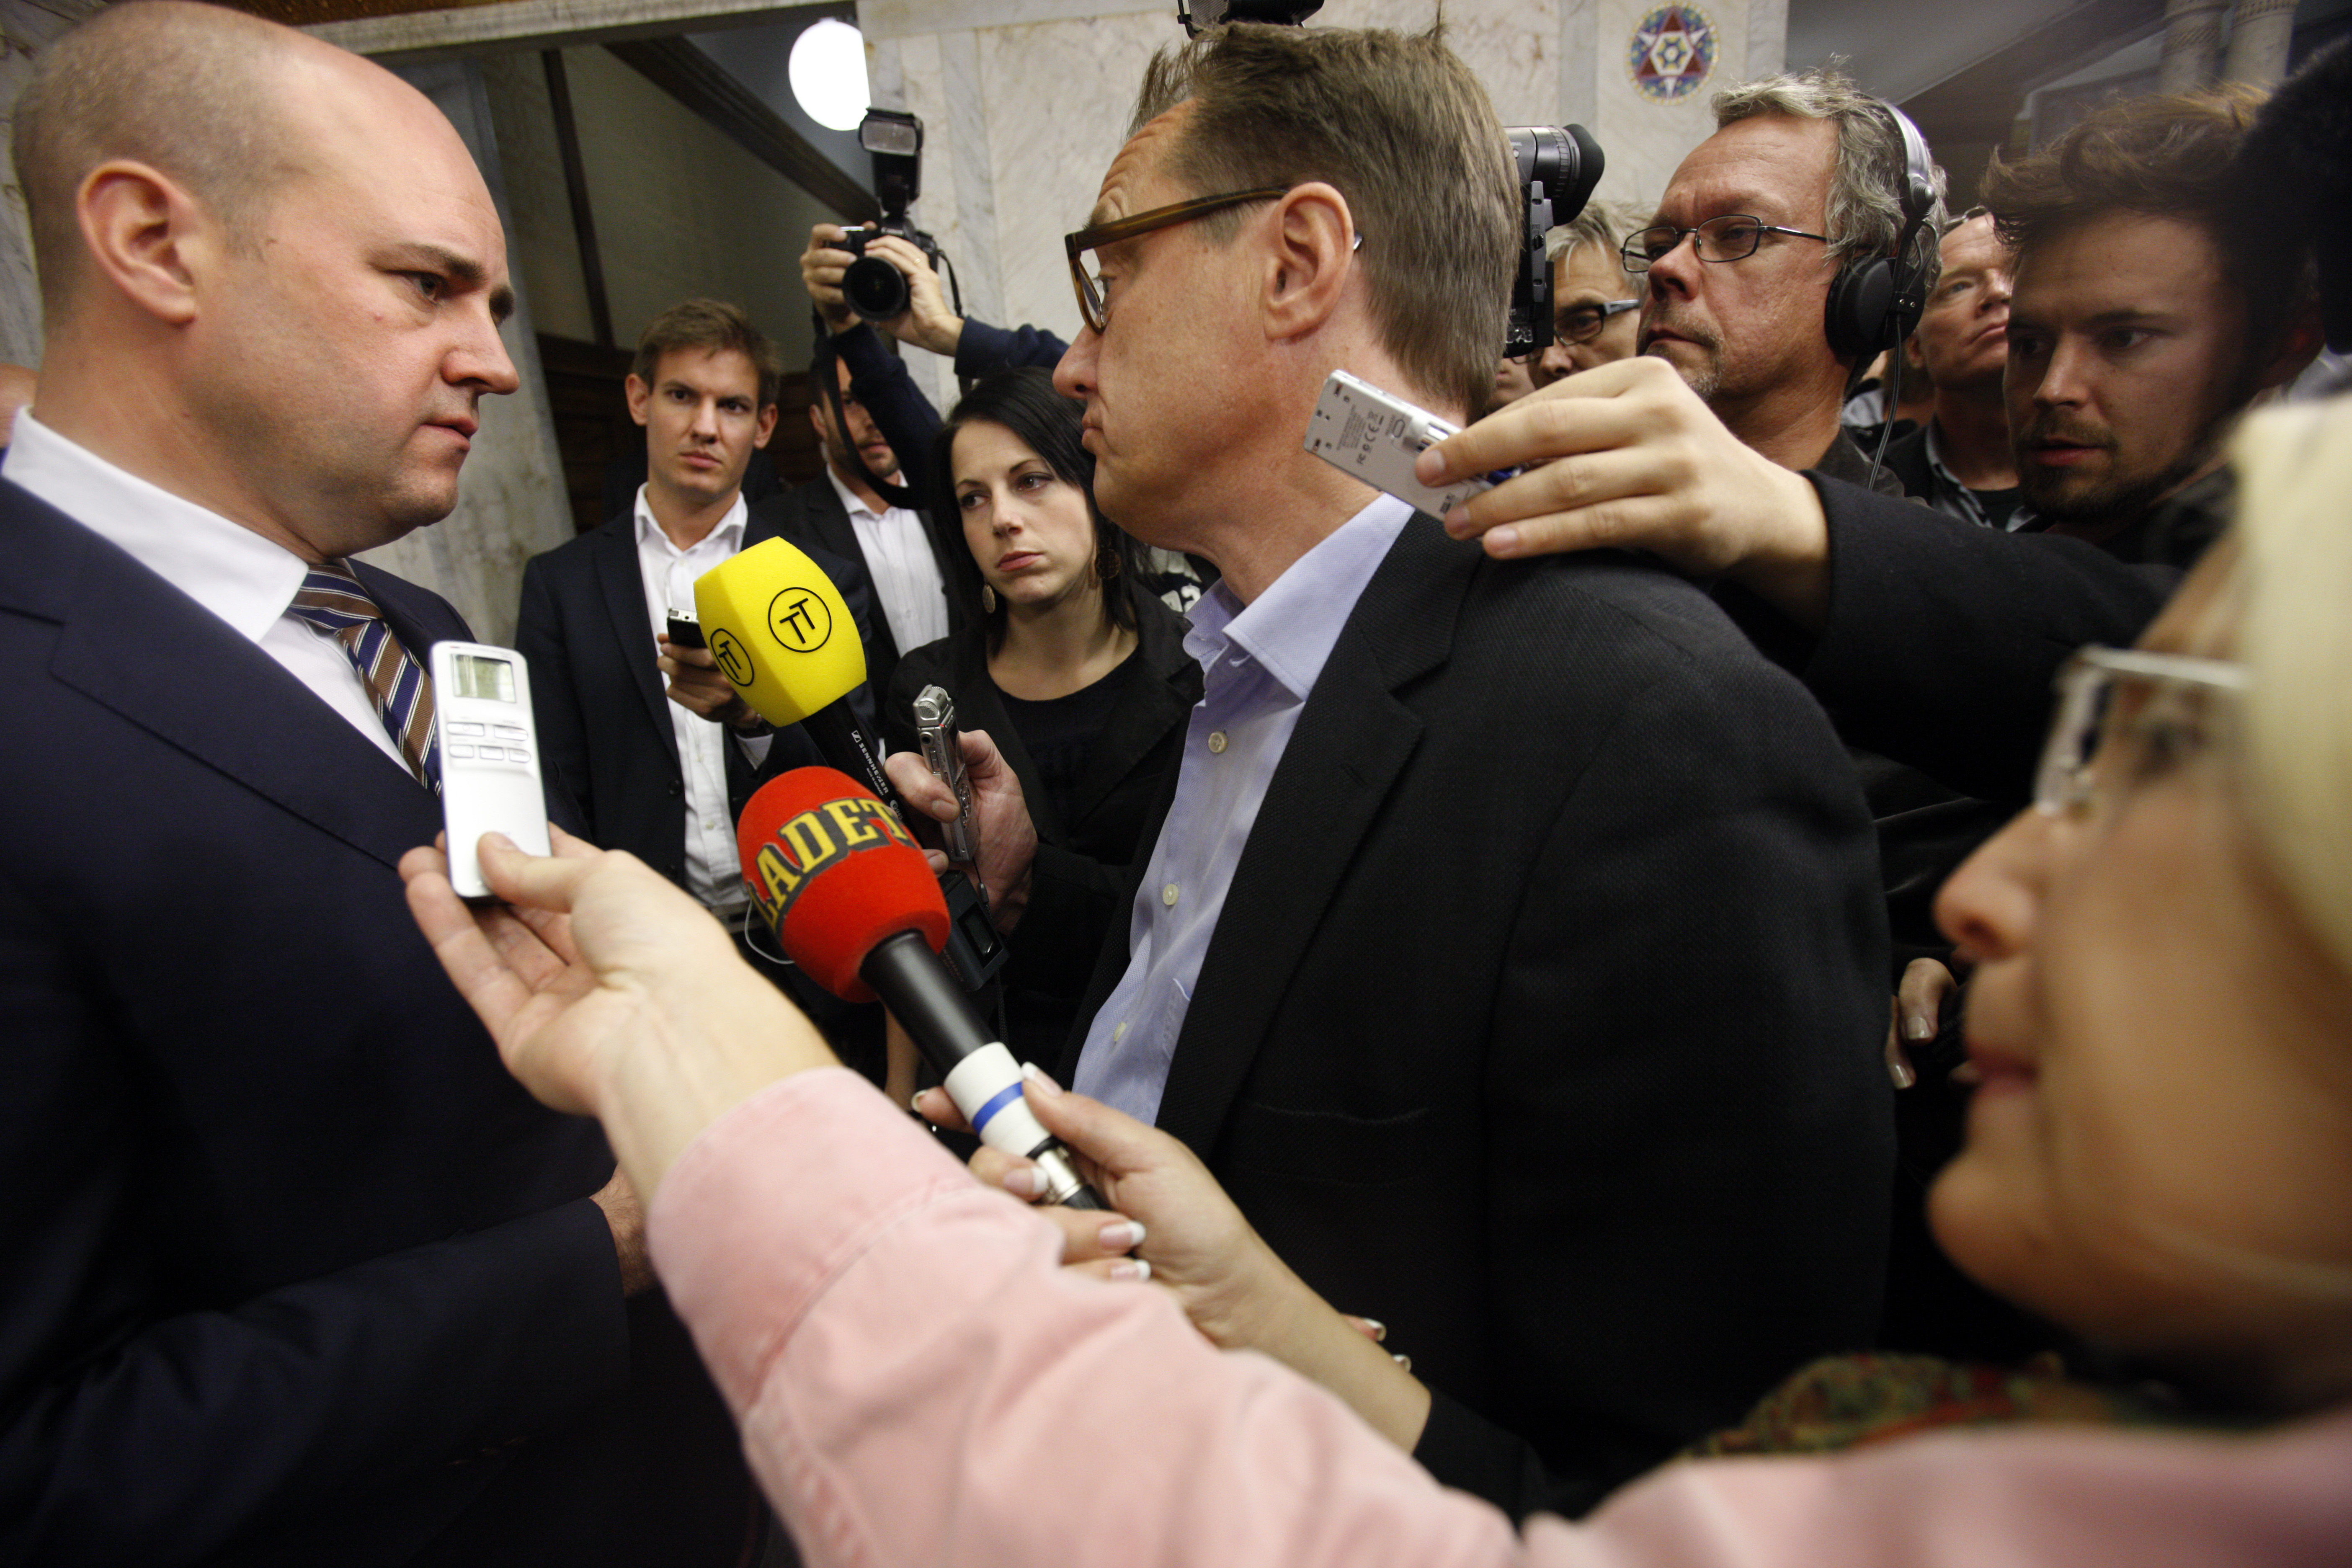 Riksdagsvalet 2010, Alliansen, Fredrik Reinfeldt, Regeringen, Mandat, Valmyndigheten, Riksdagen, Göran Hägglund